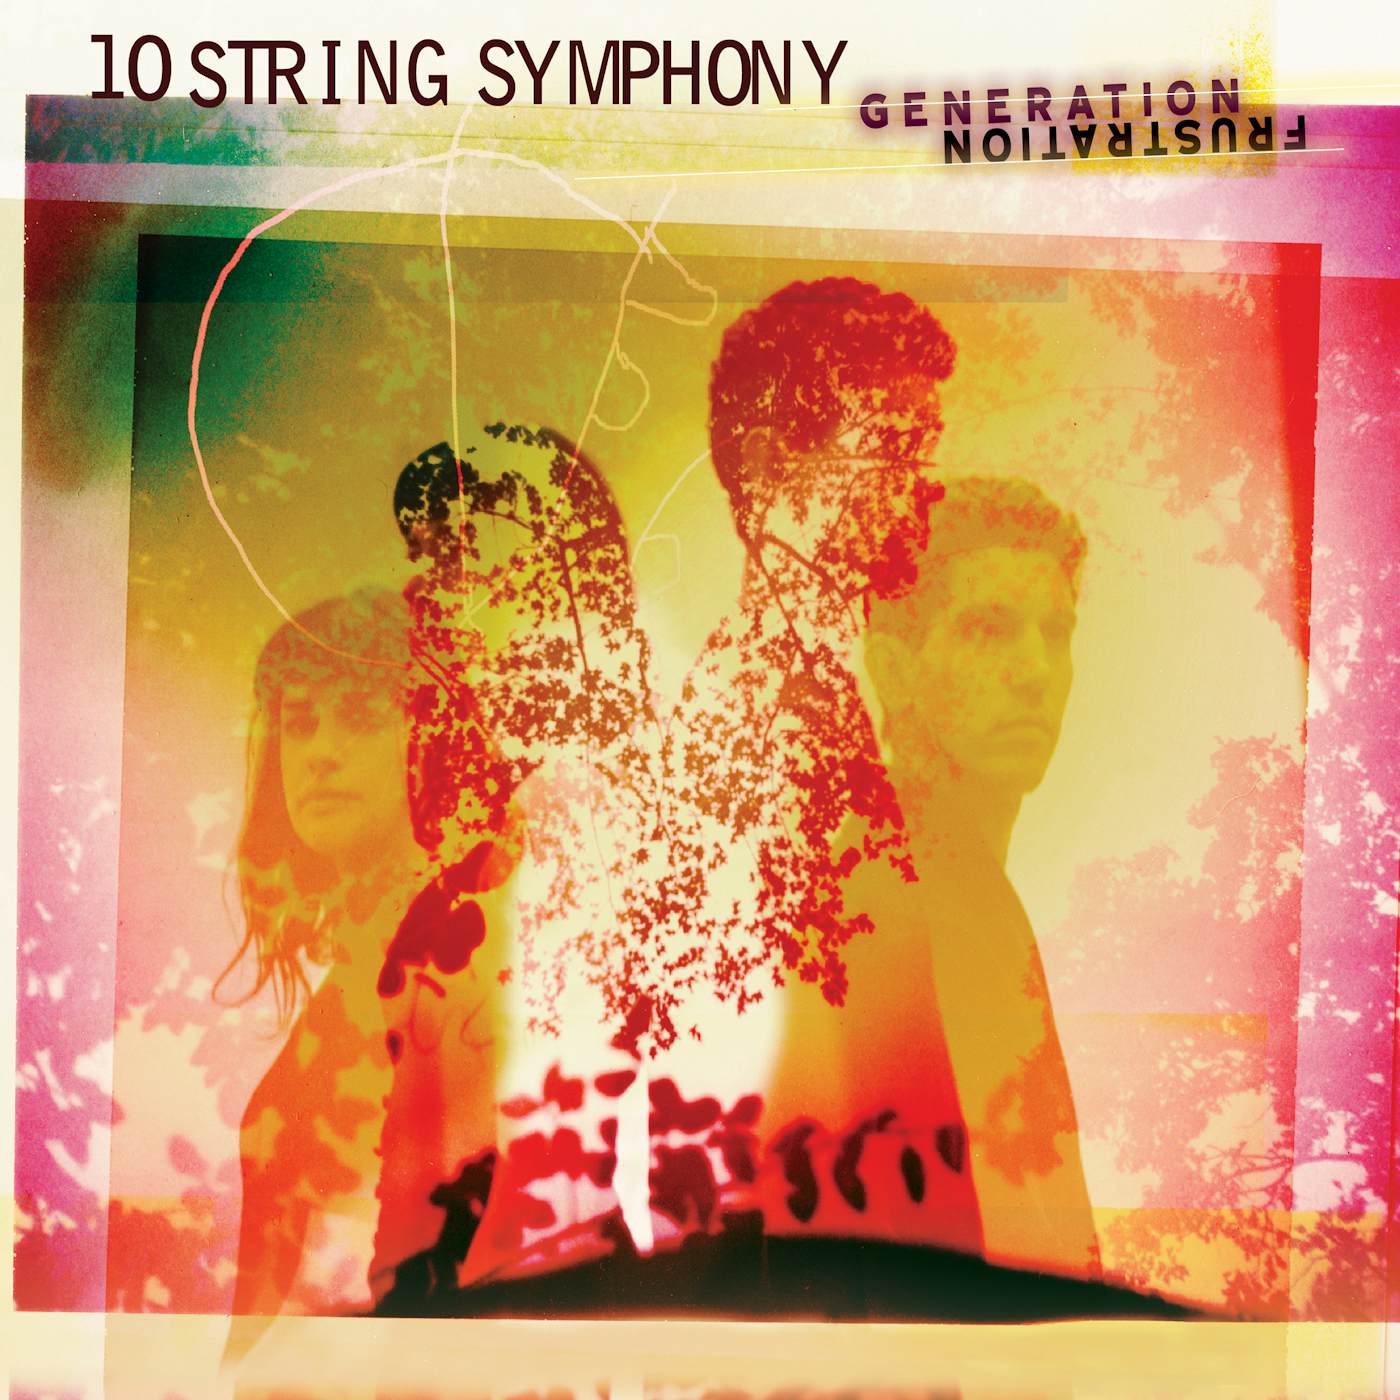 10 String Symphony GENERATION FRUSTRATION CD